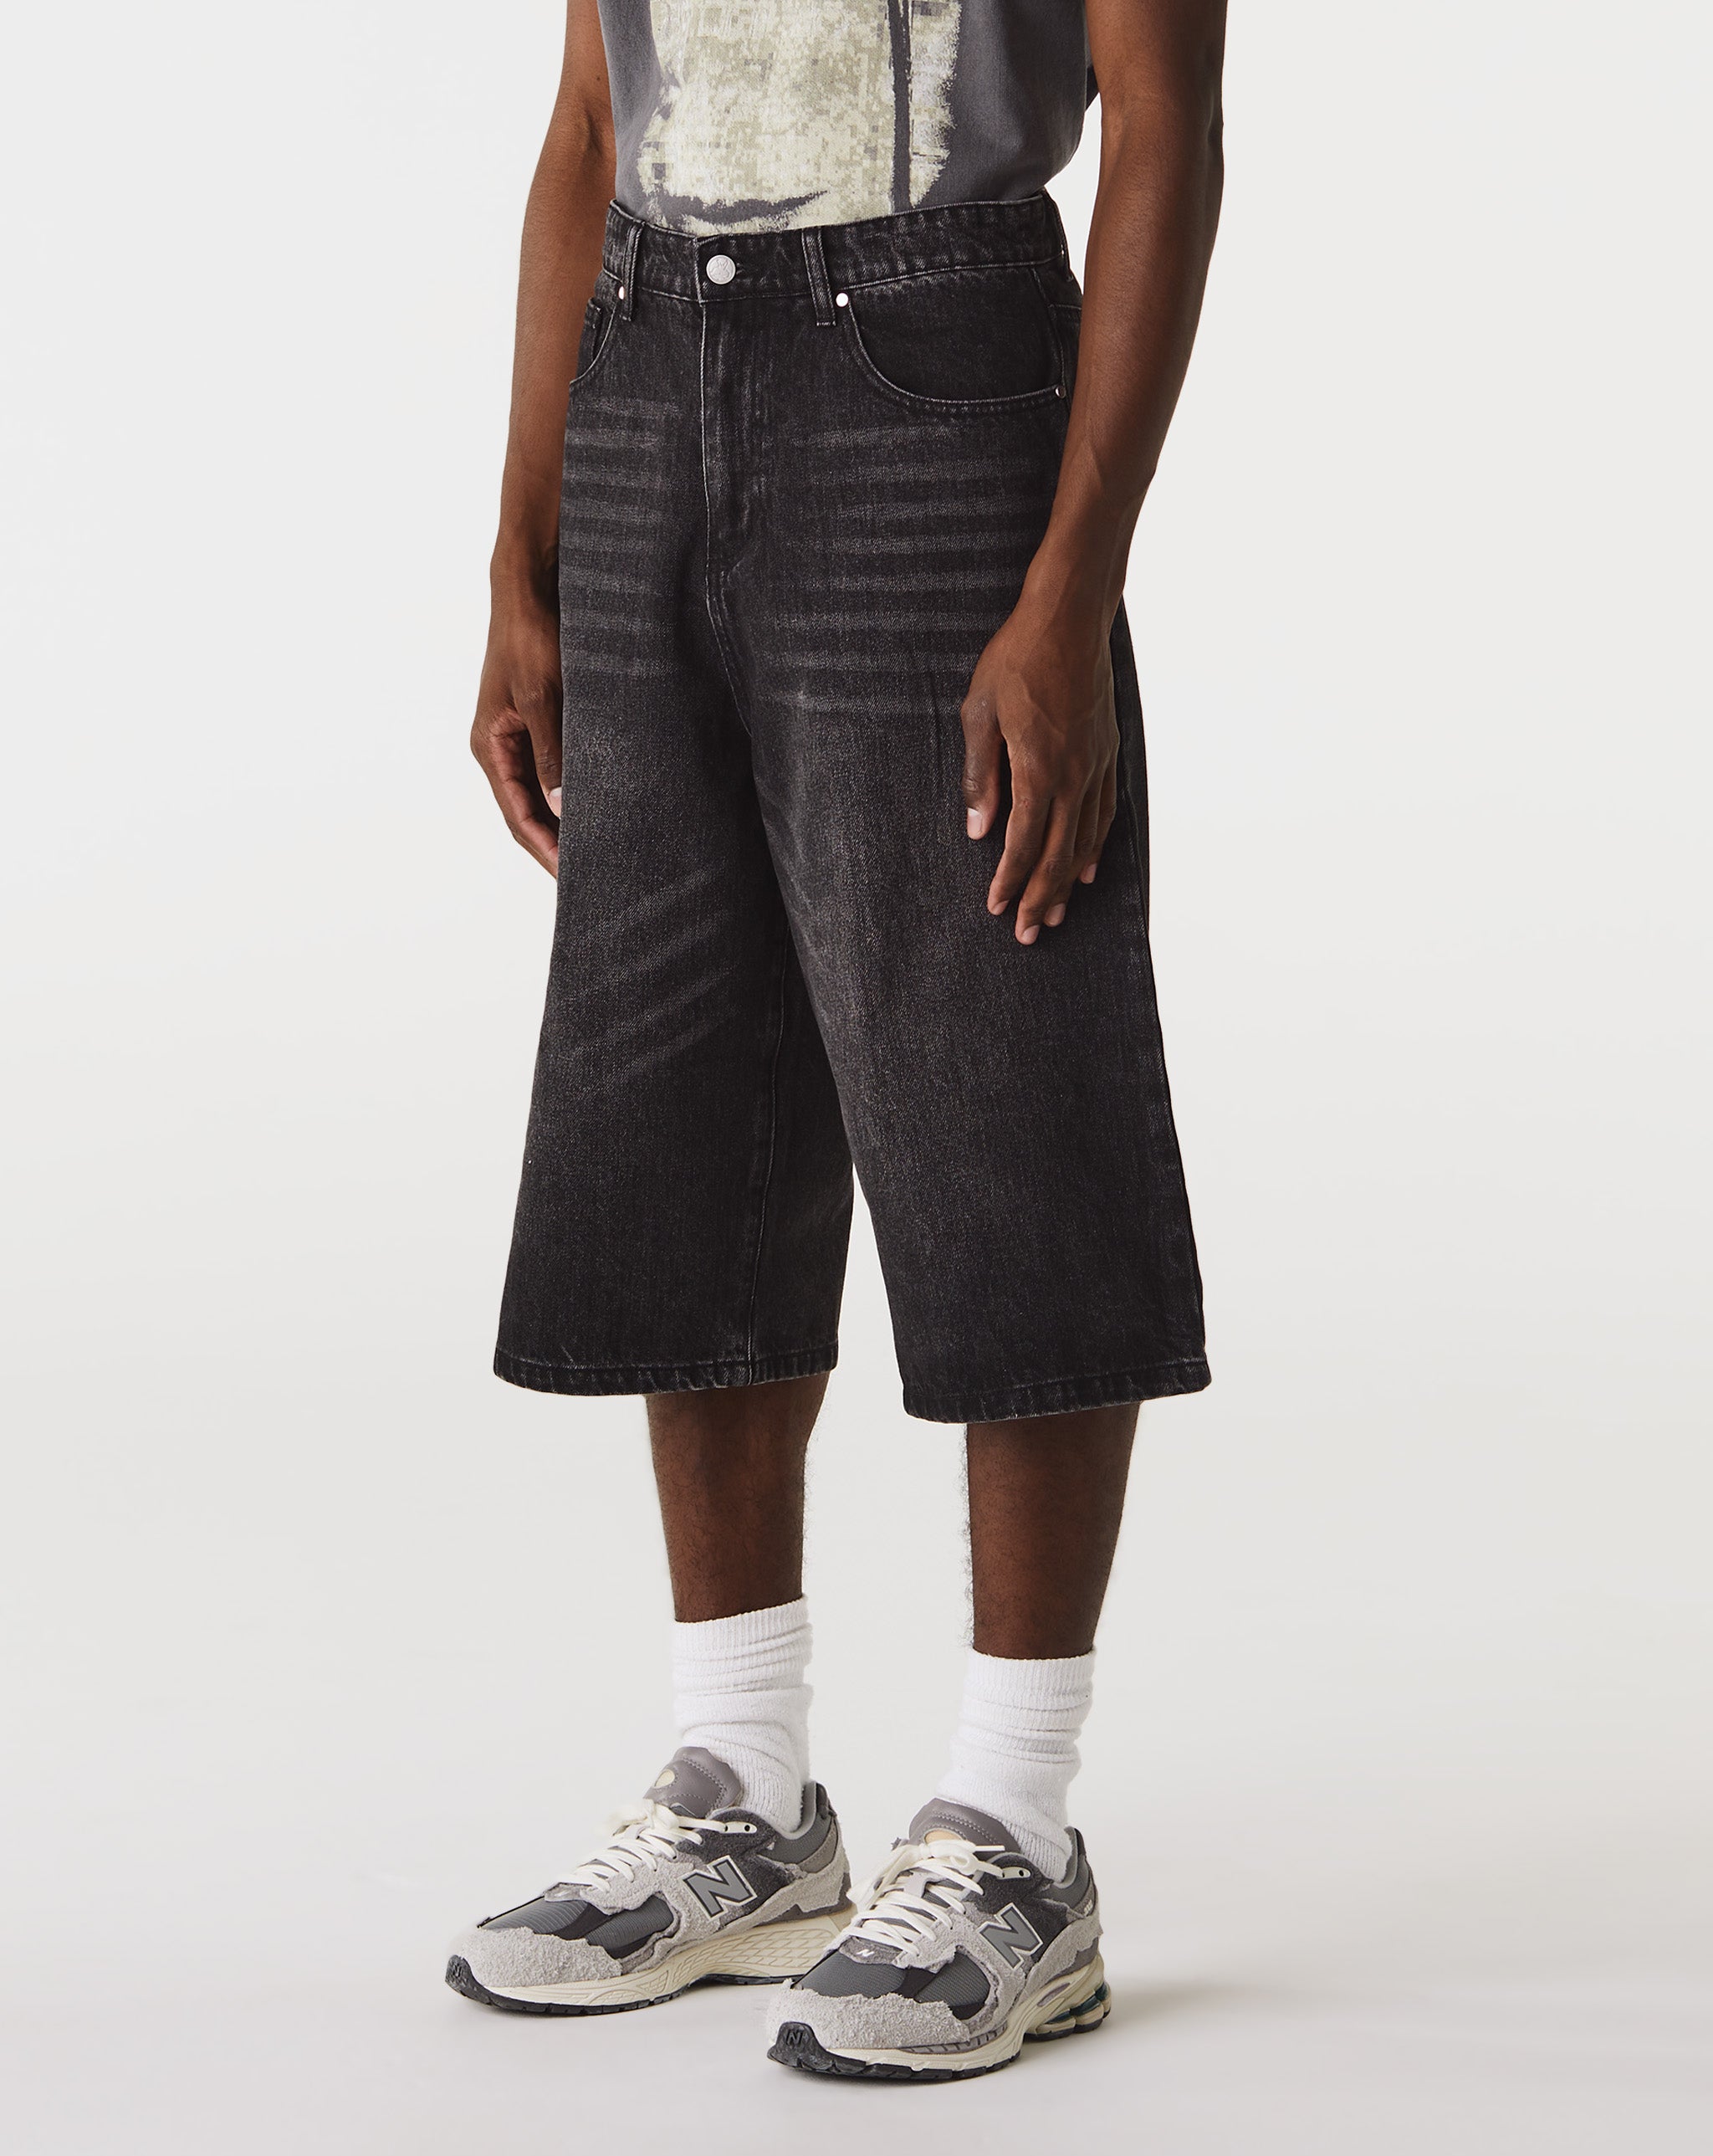 Basketcase Gallery Breacher Denim Shorts  - Cheap Cerbe Jordan outlet